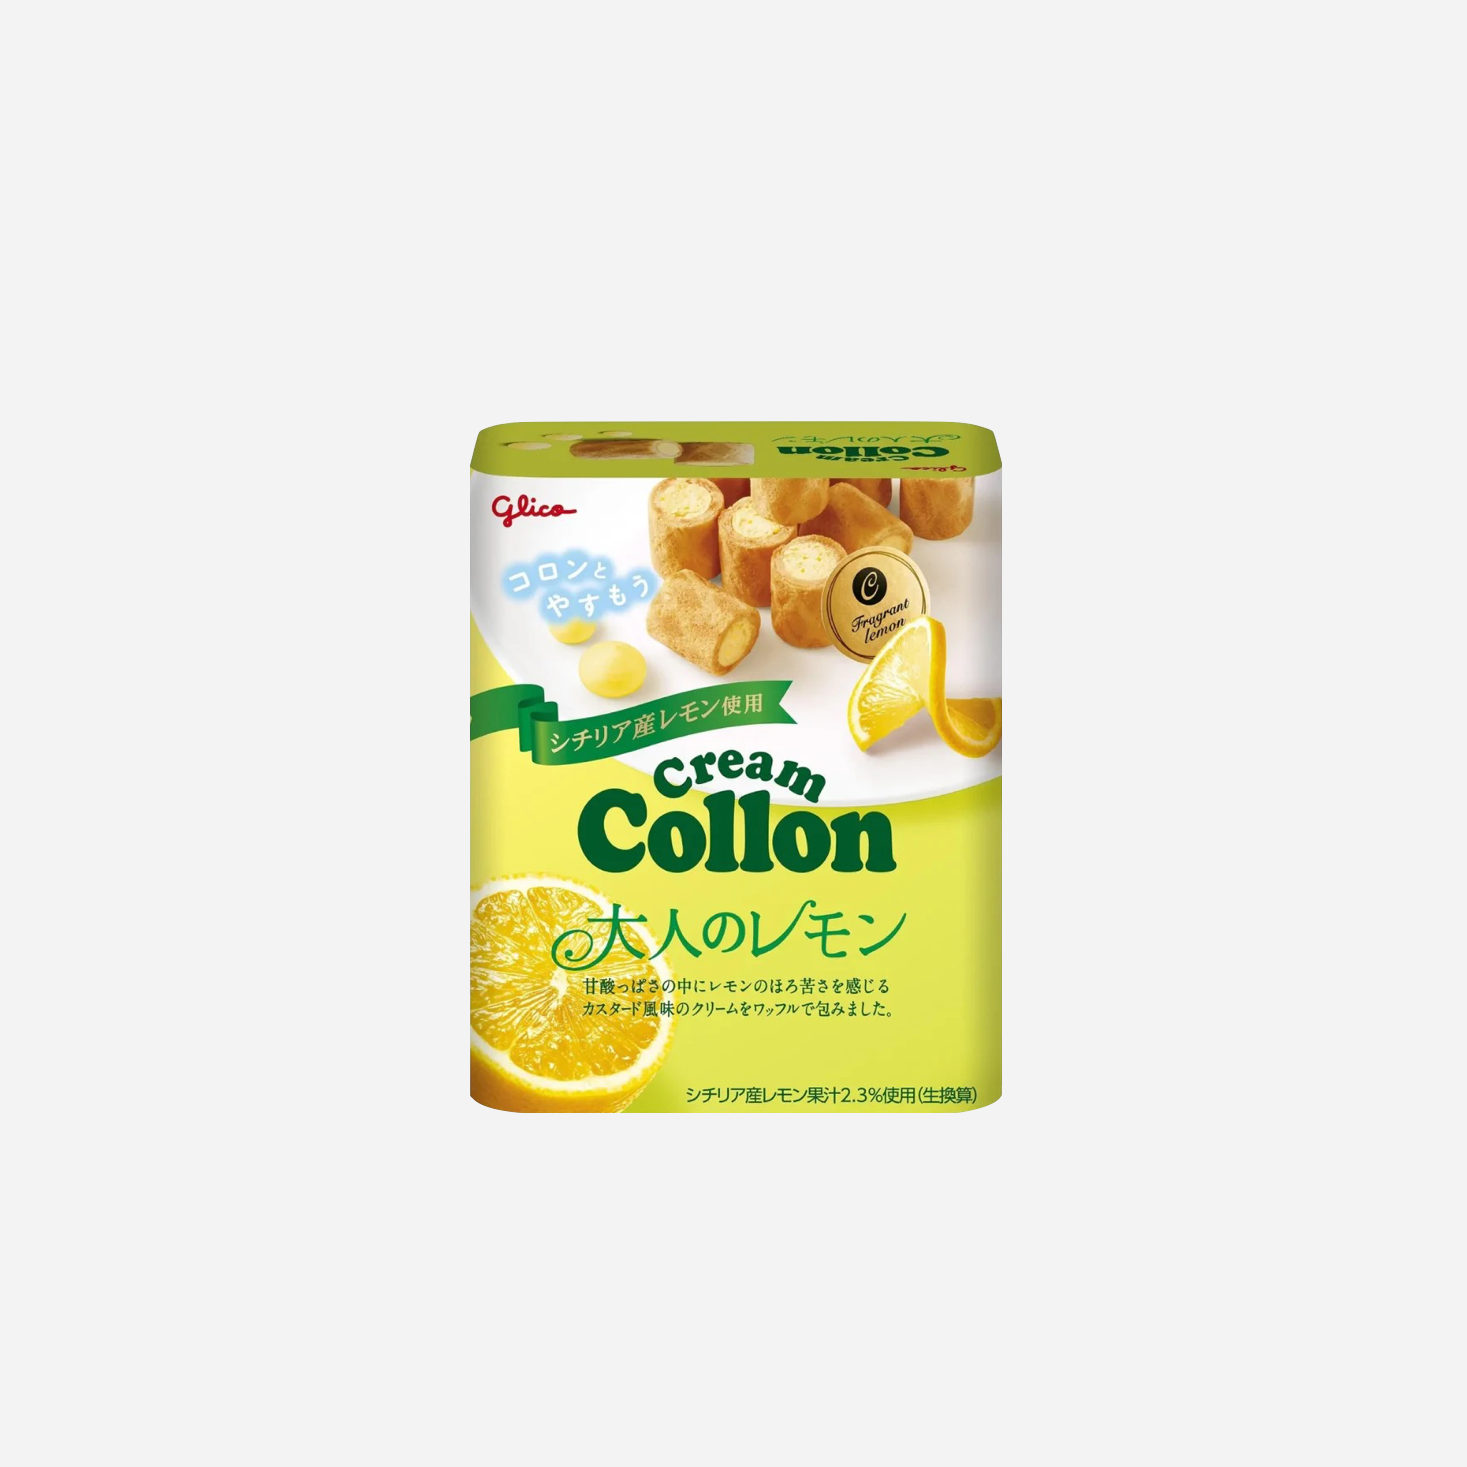 Cream Collon with Lemon